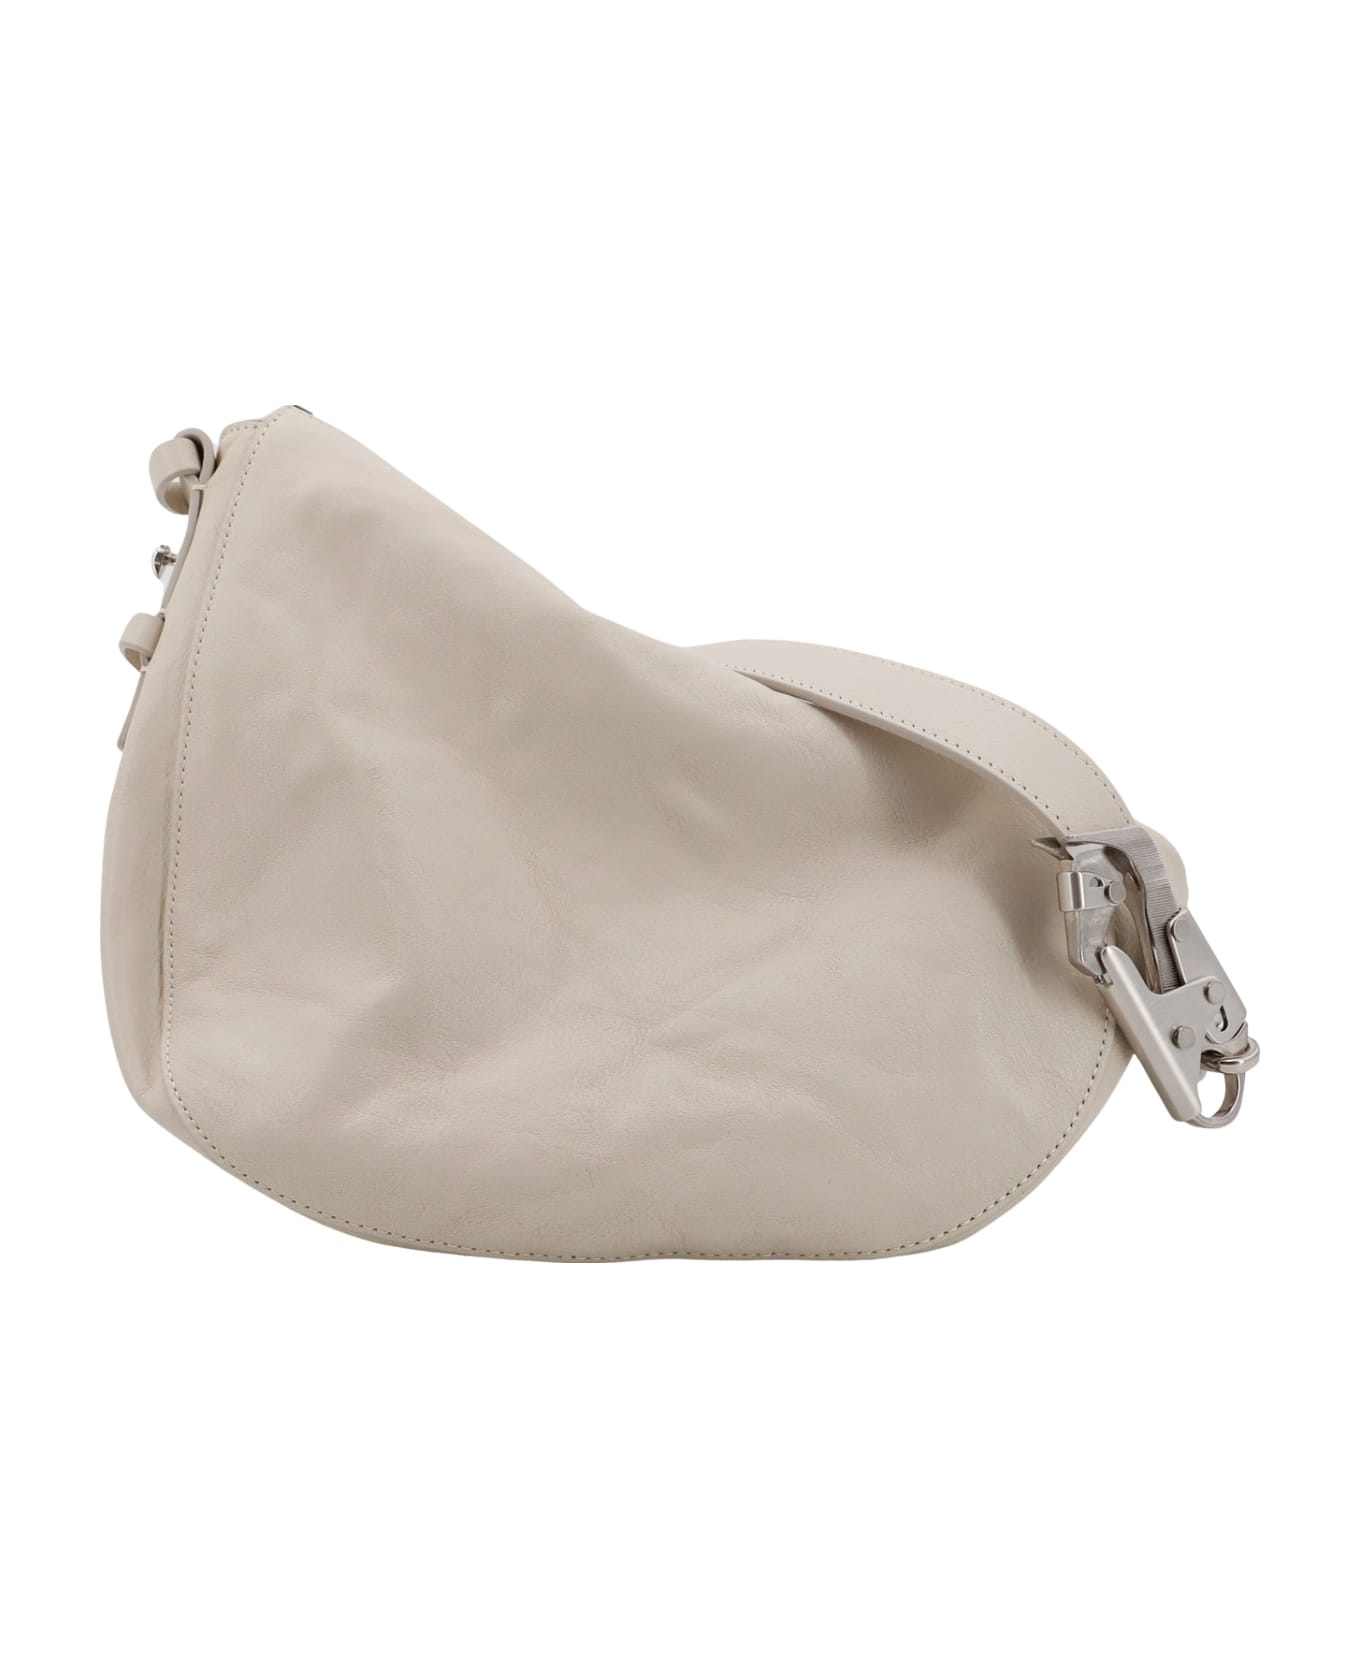 Burberry Knight Shoulder Bag - Soap